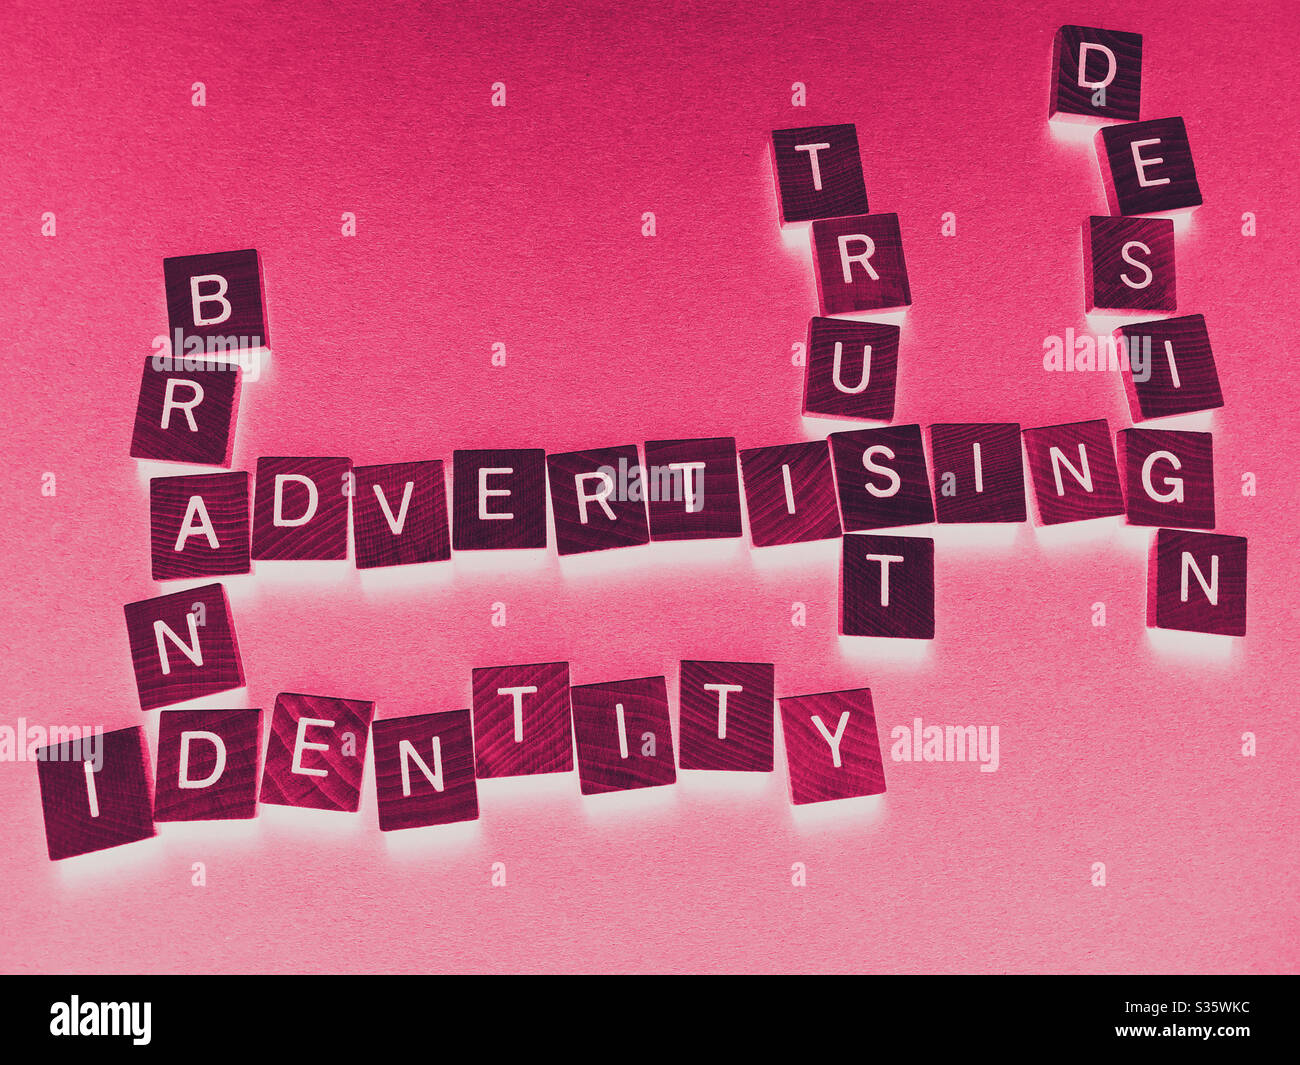 Advertising, Brand, Identity, Trust, Design, crossword in red Stock Photo